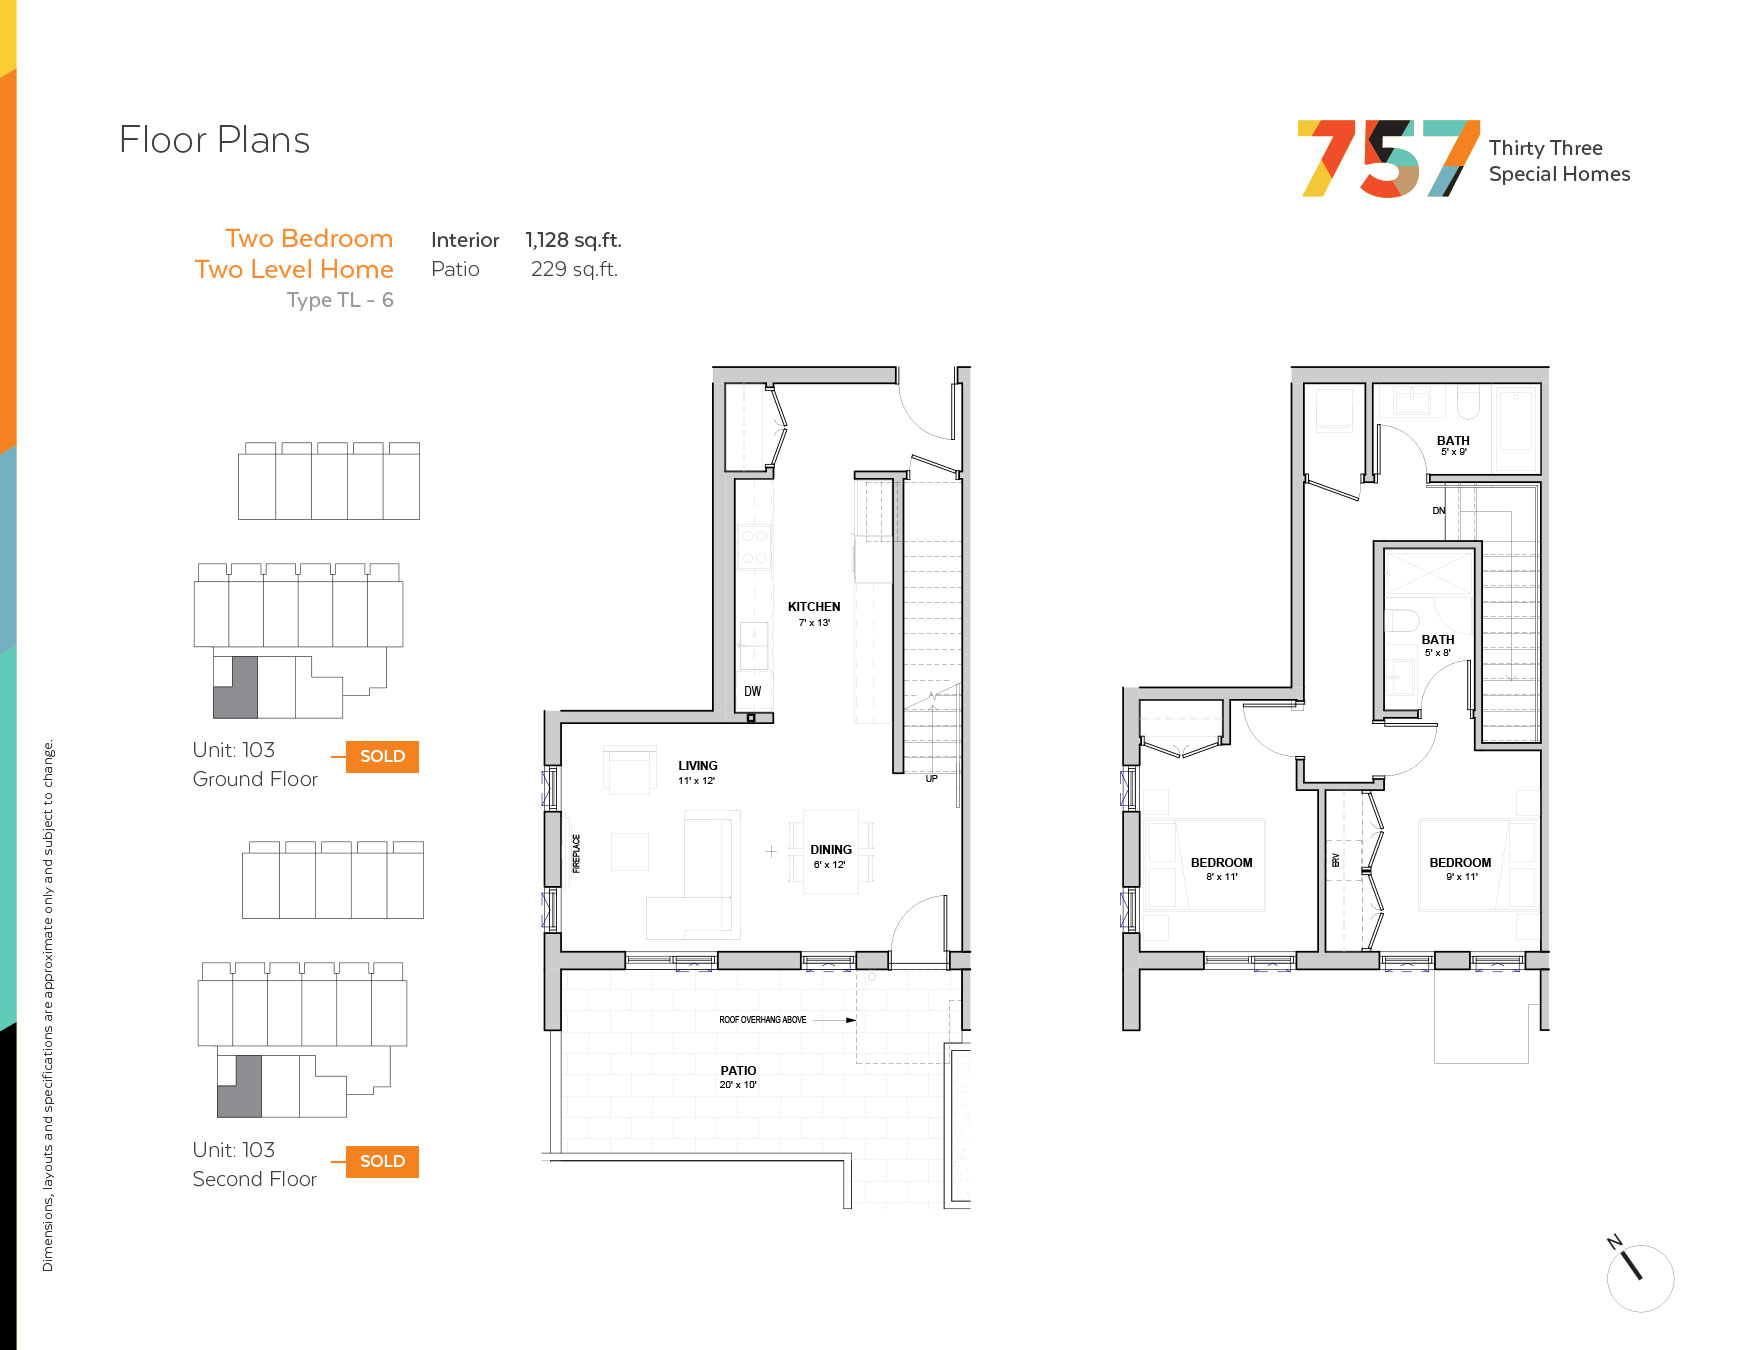 Two Bedroom Two Level Floor Plan